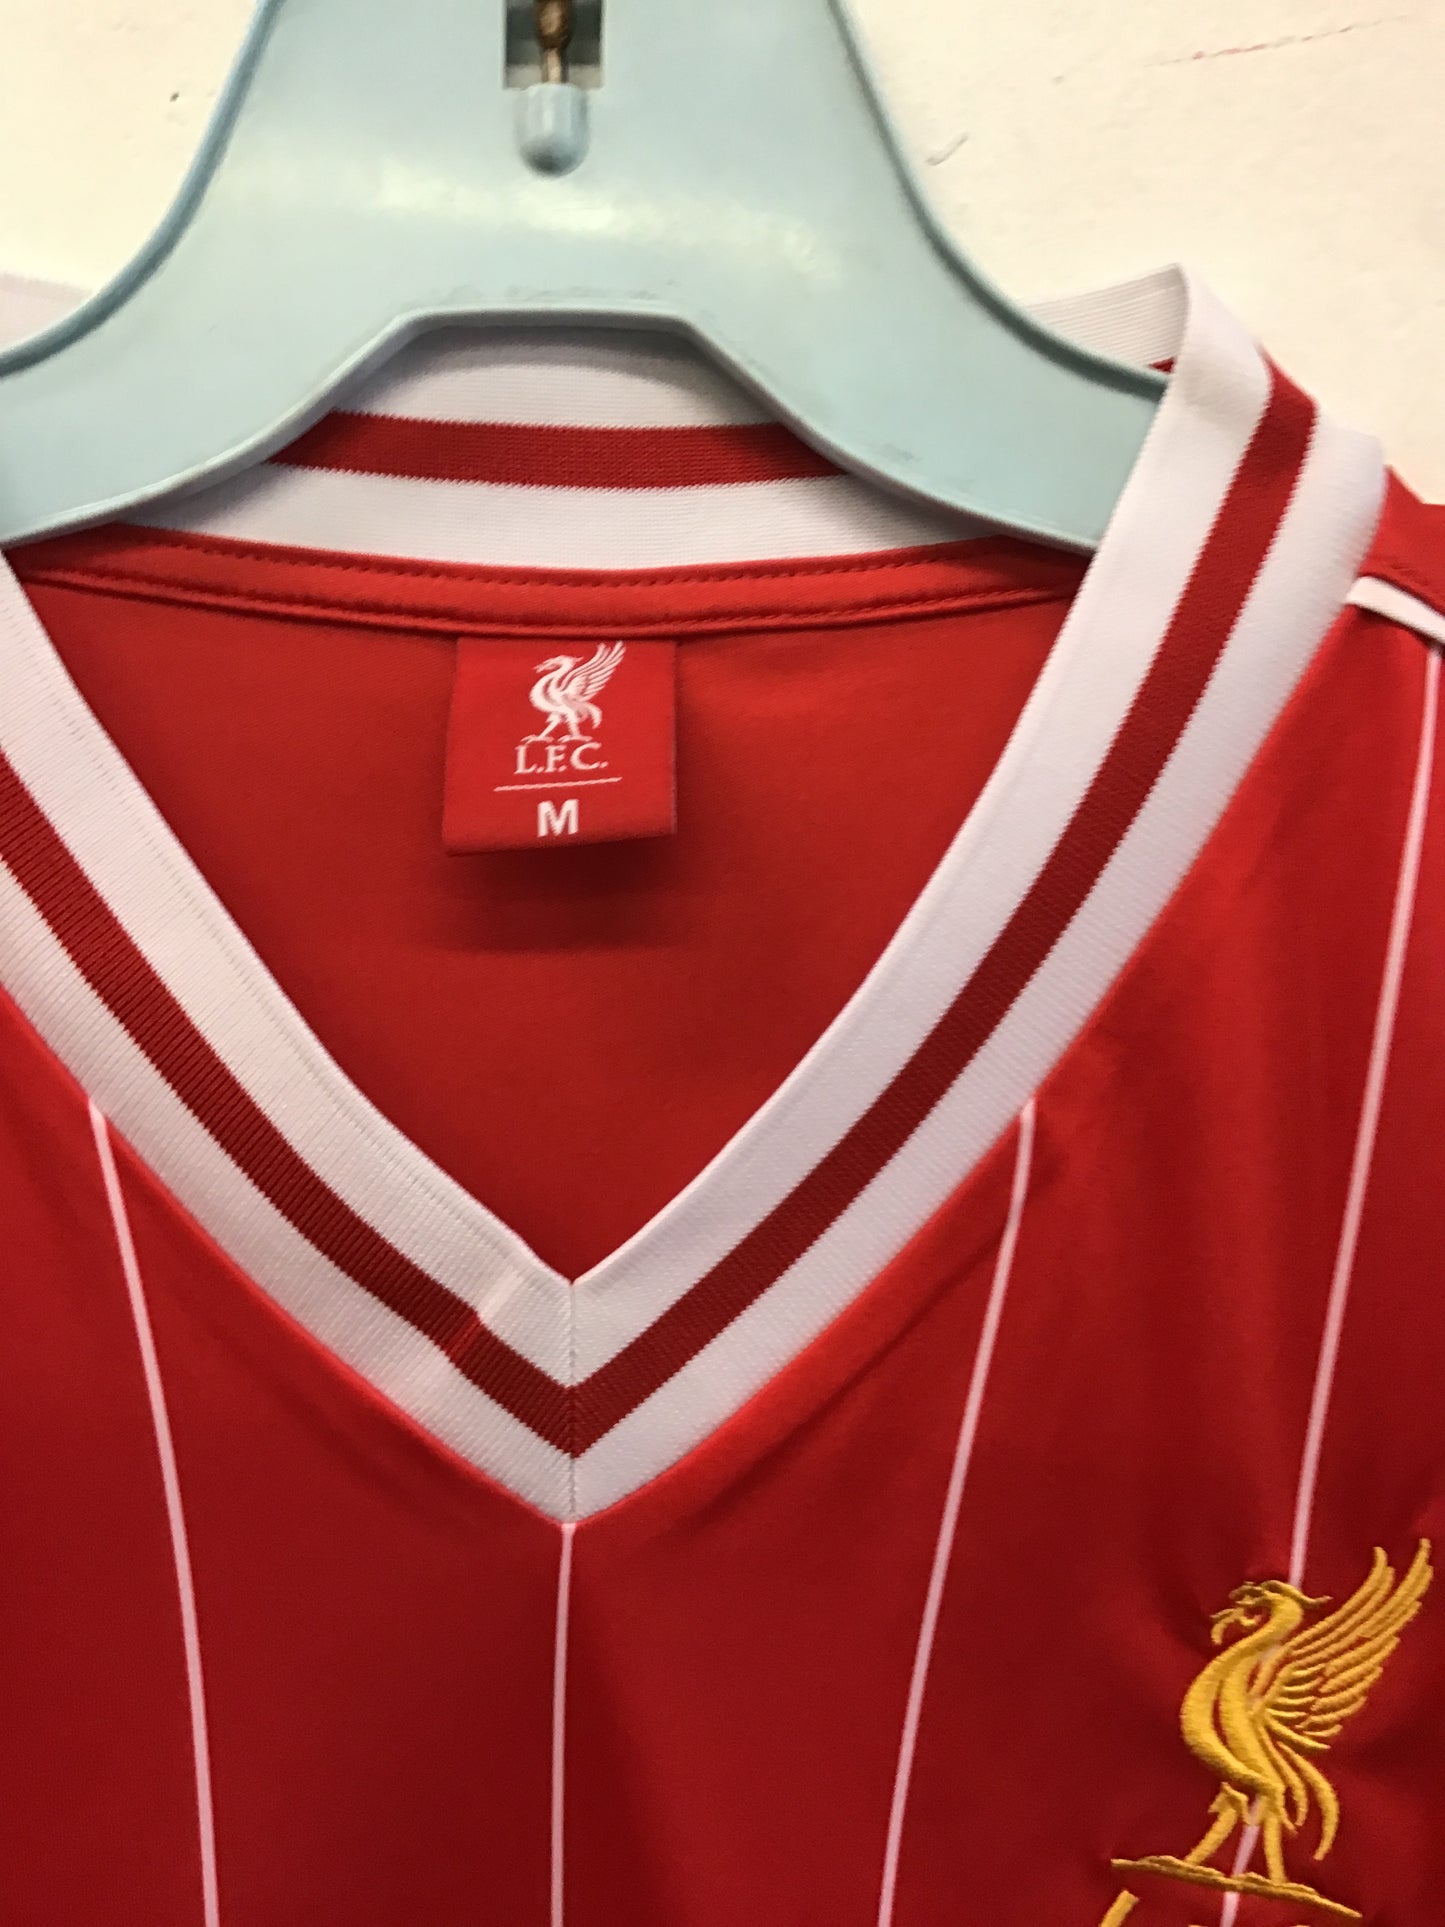 Retro LFC Liverpool FC Crown Paints Jersey,  Size M